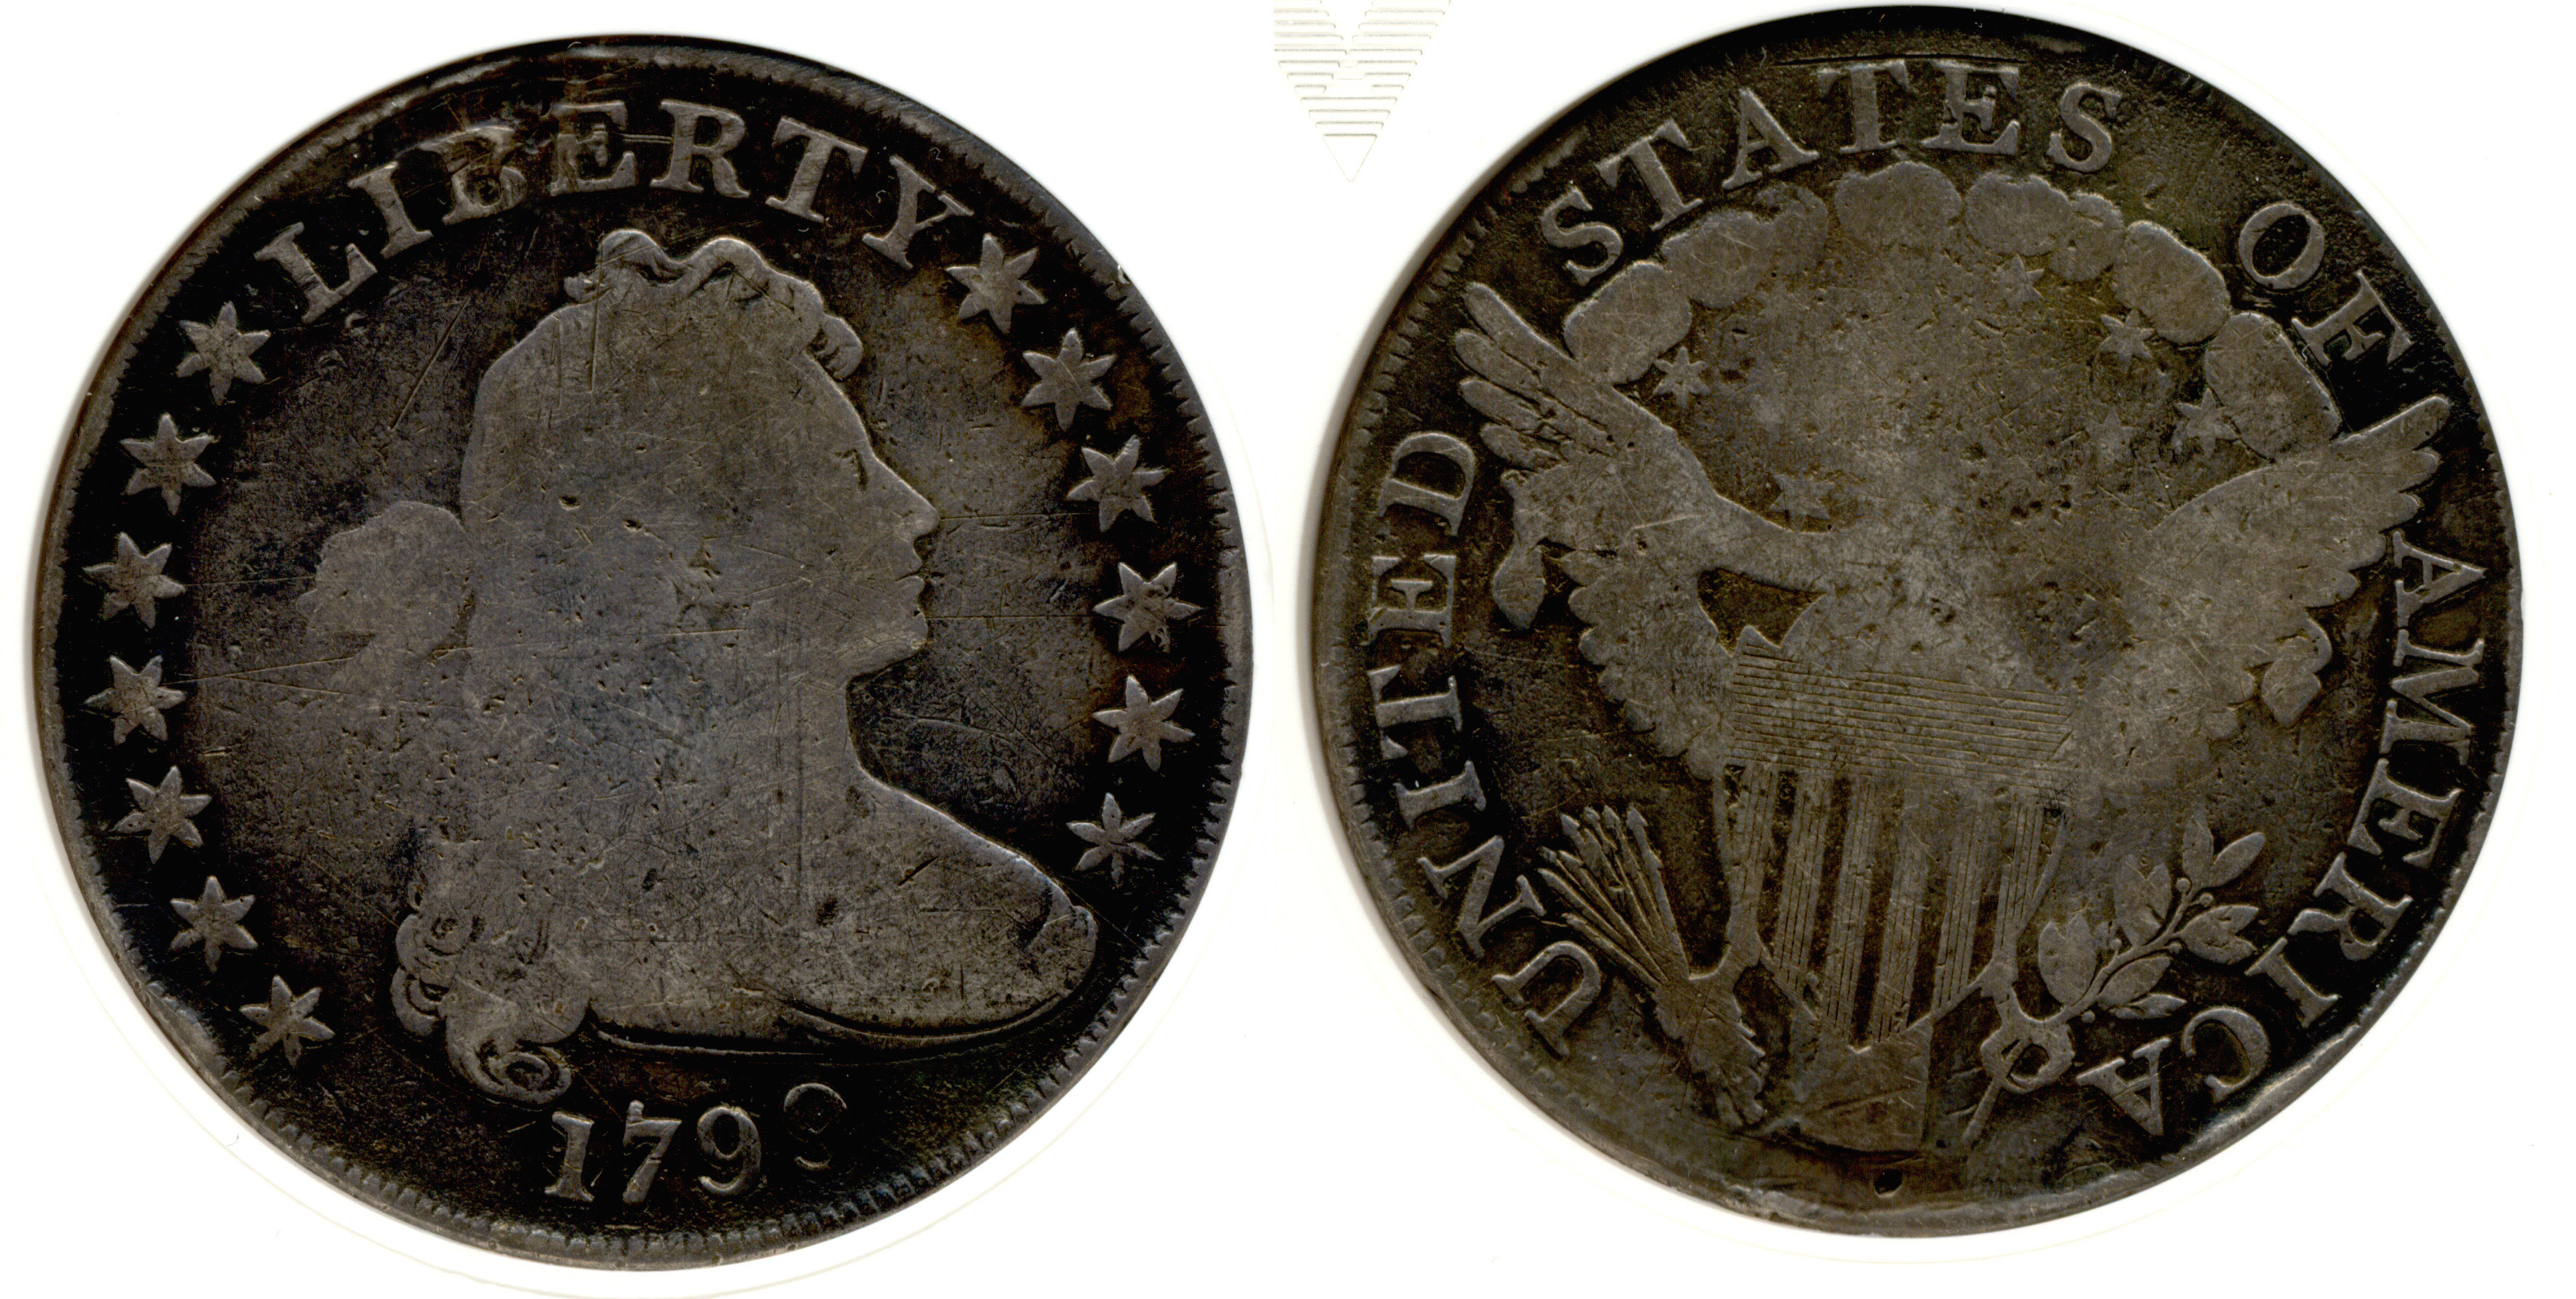 1799 Draped Bust Large Eagle Silver Dollar ANACS Good-4 net AG-3